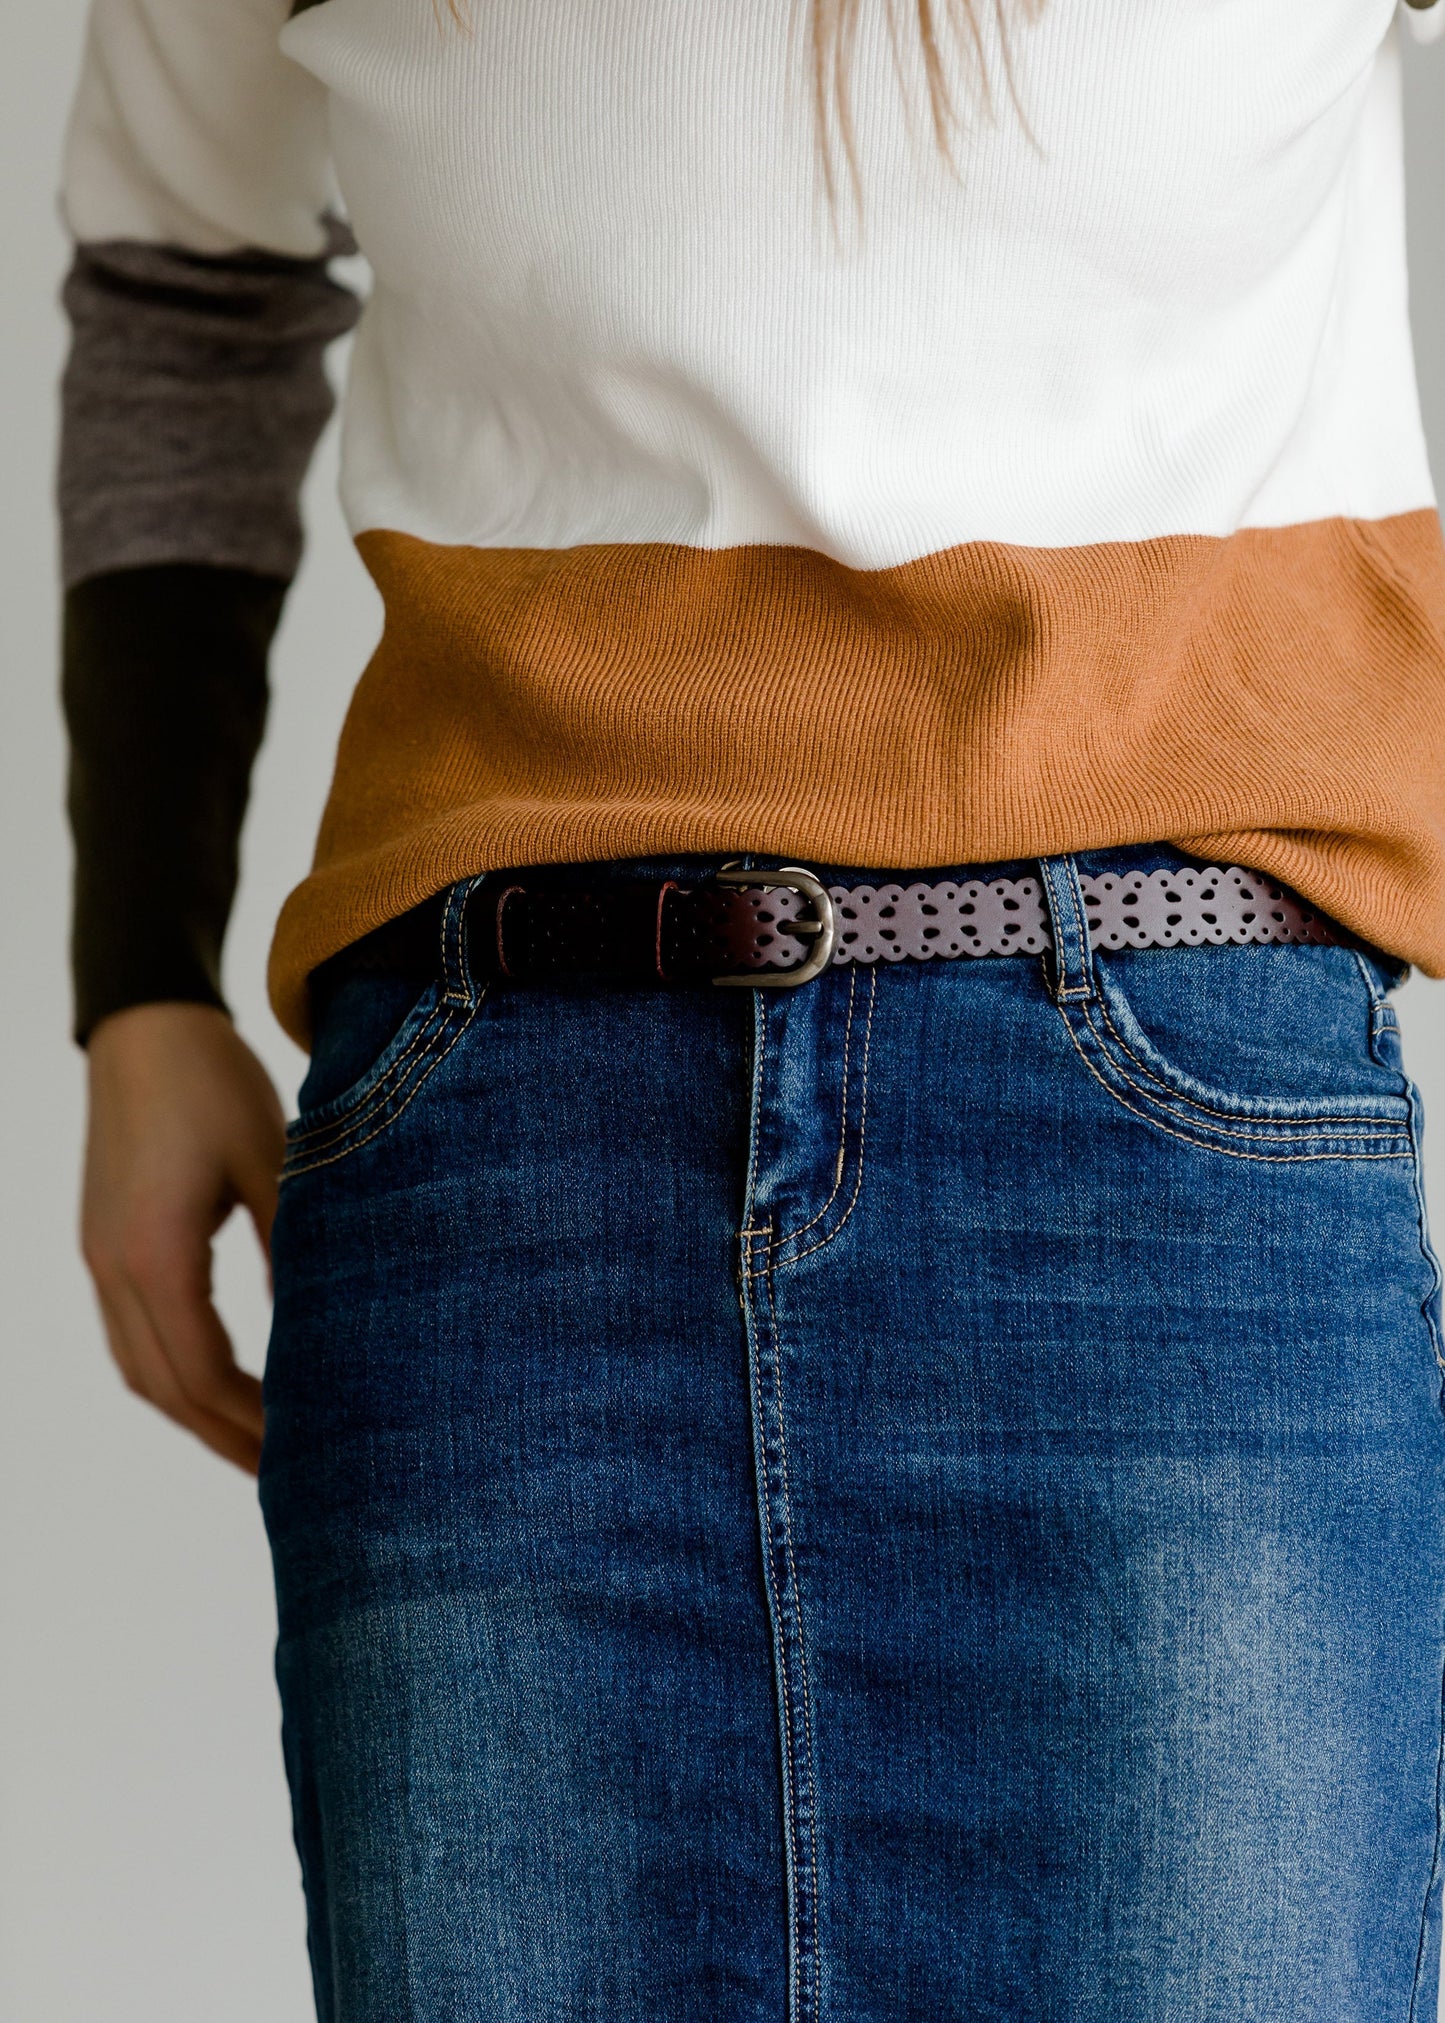 Ornate Leather Belt - FINAL SALE Accessories